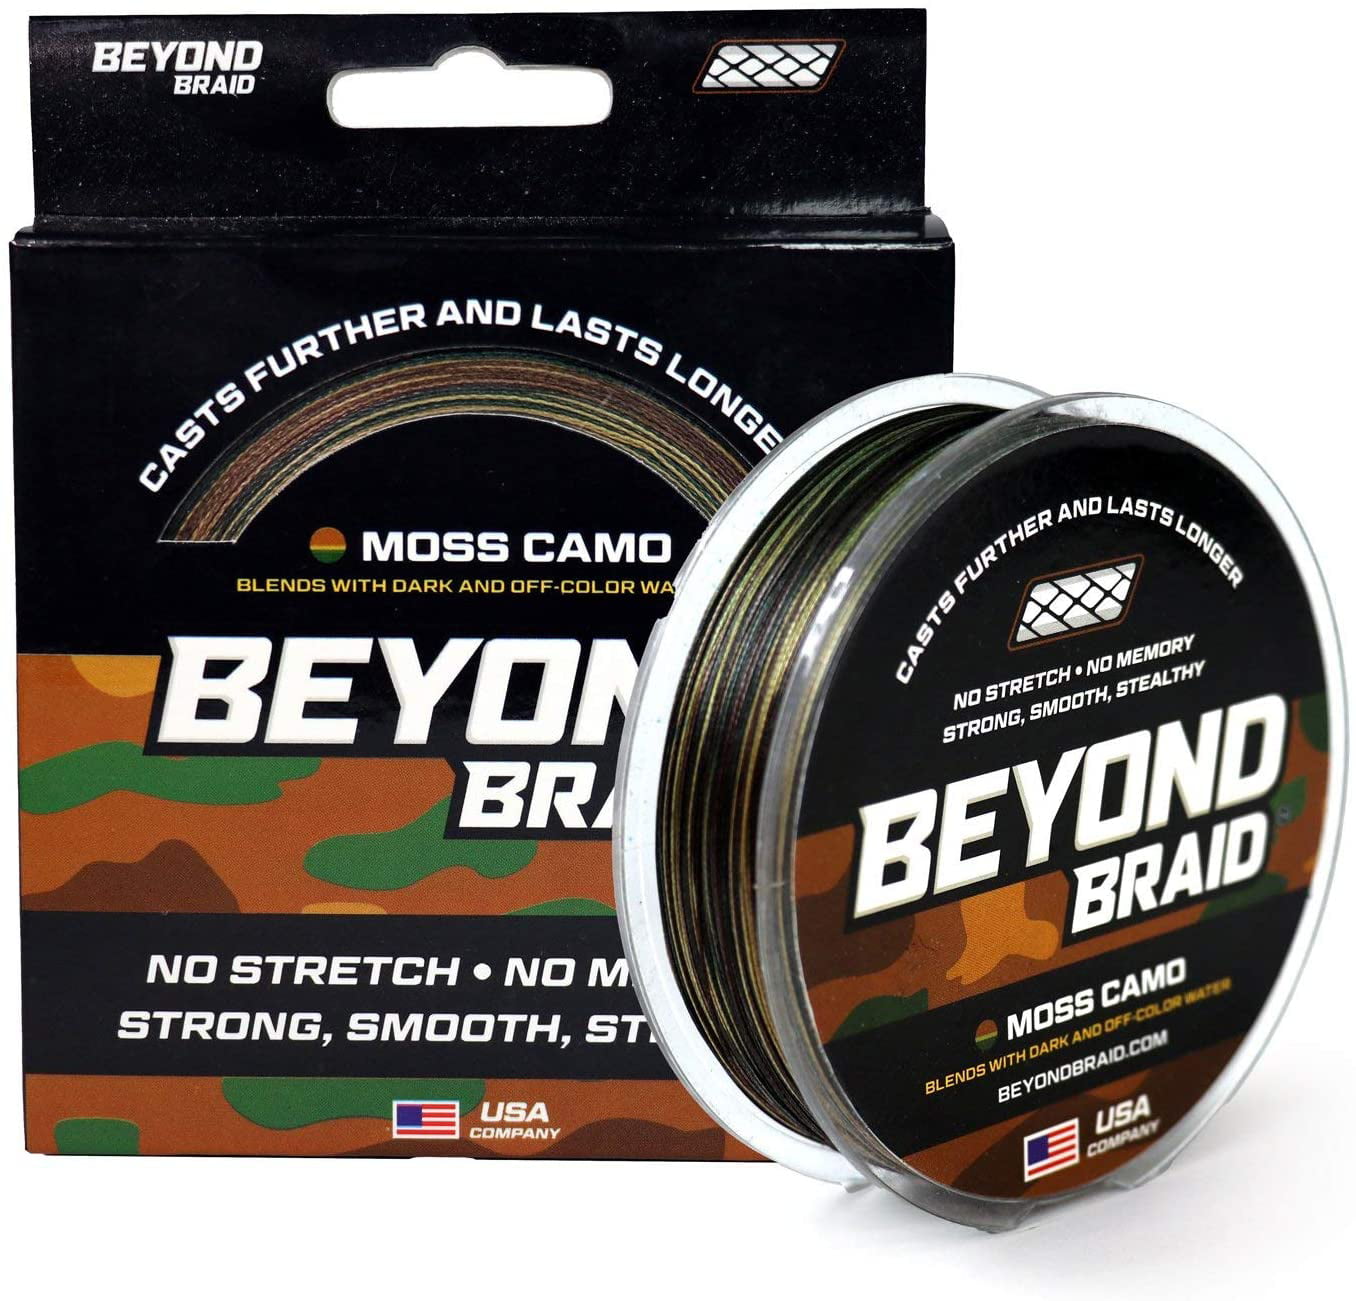 Beyond Braid Lead Core Trolling Braid - Multicolor (200 Yards